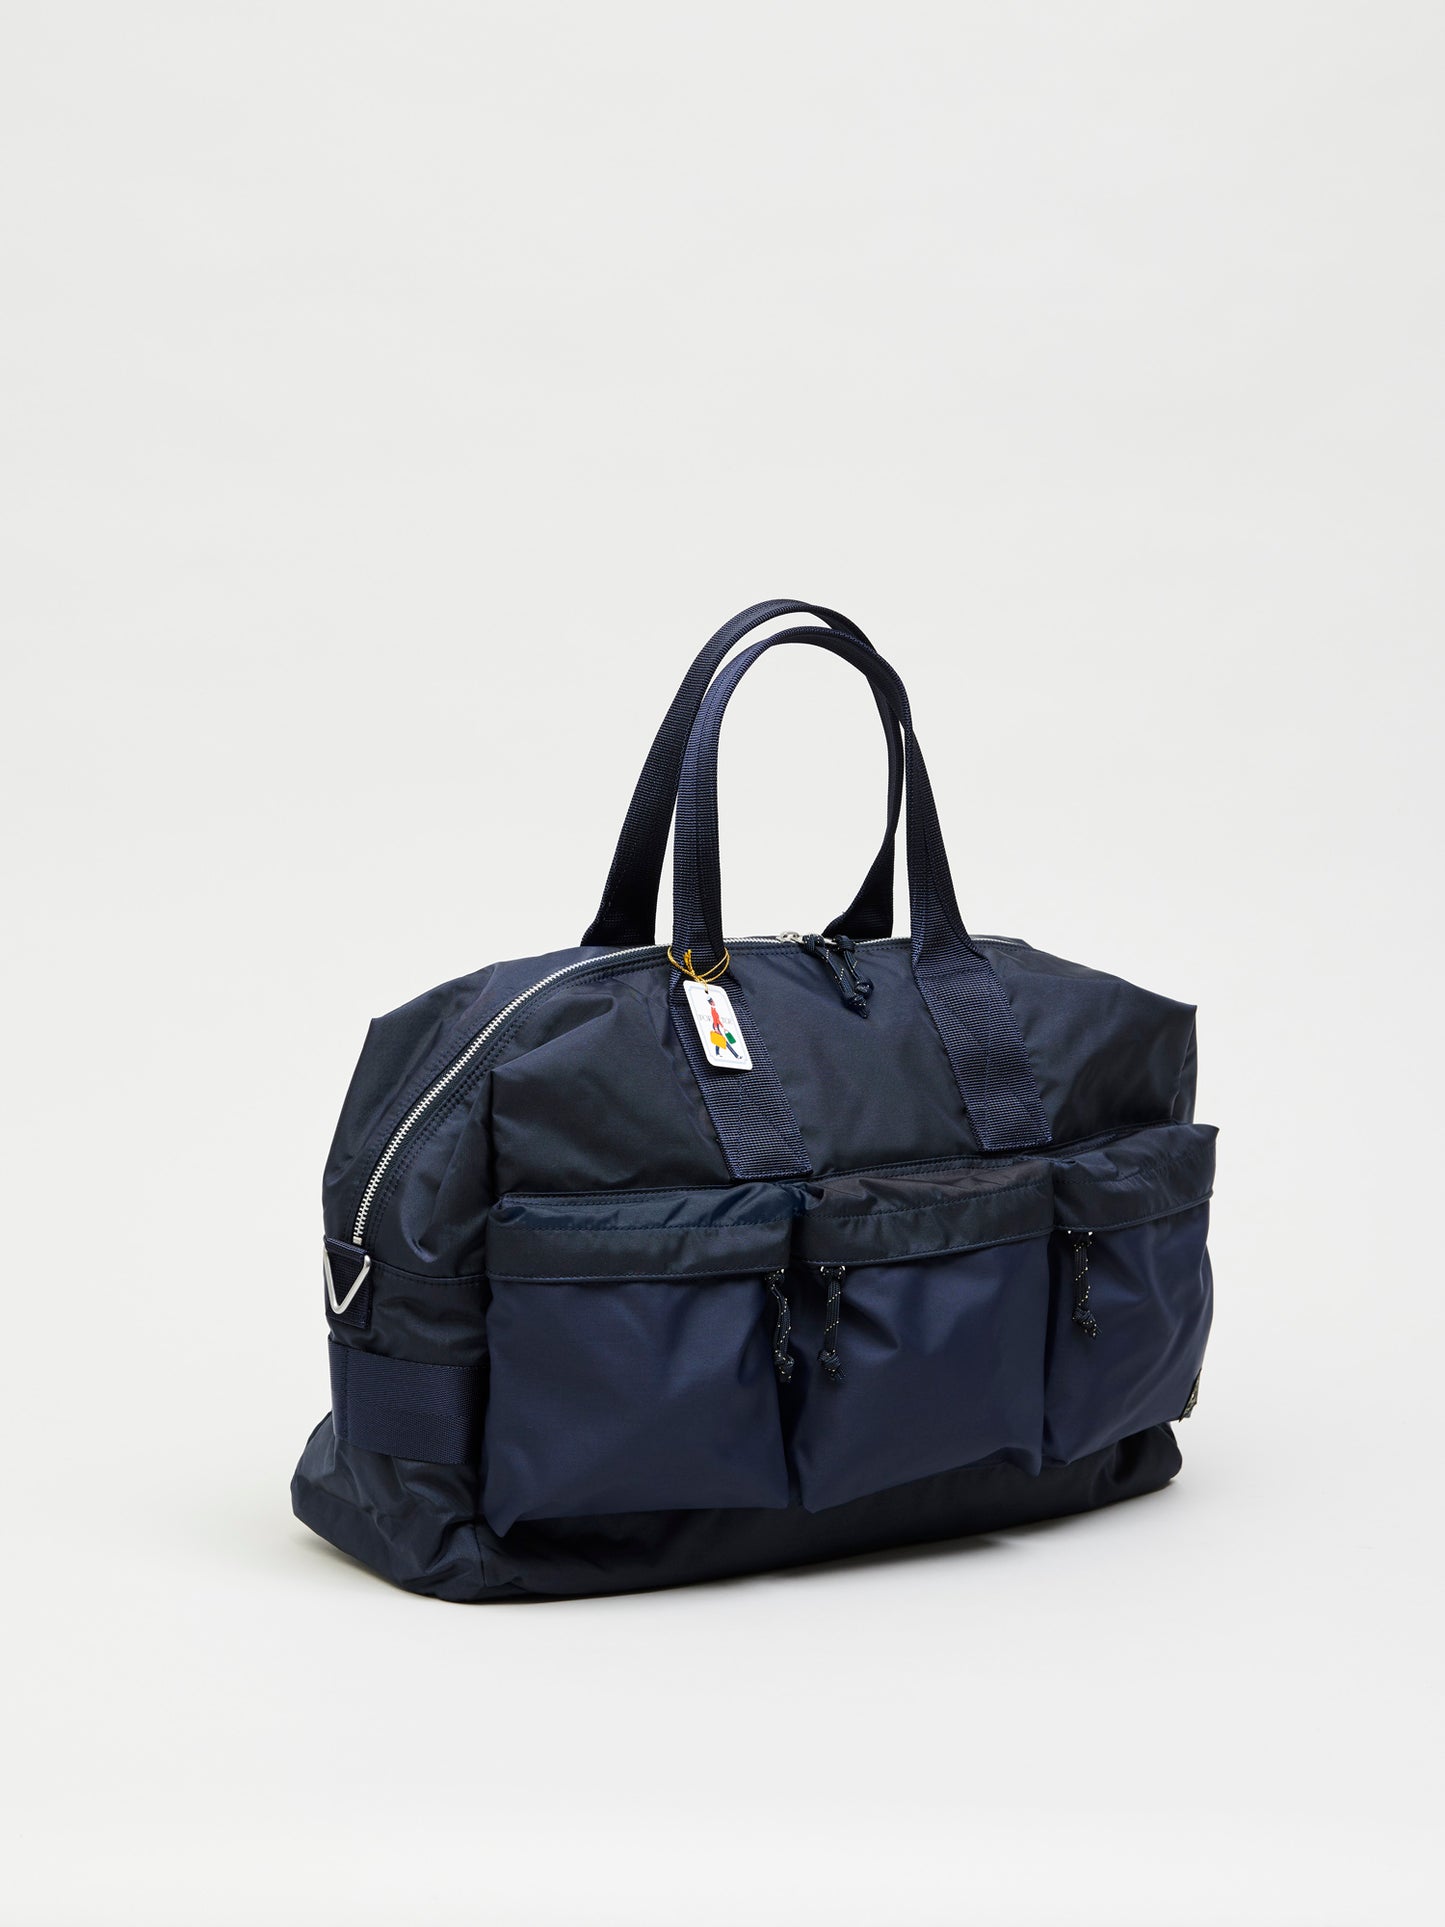 Force 2way Duffle Bag, Navy Blue - Goods